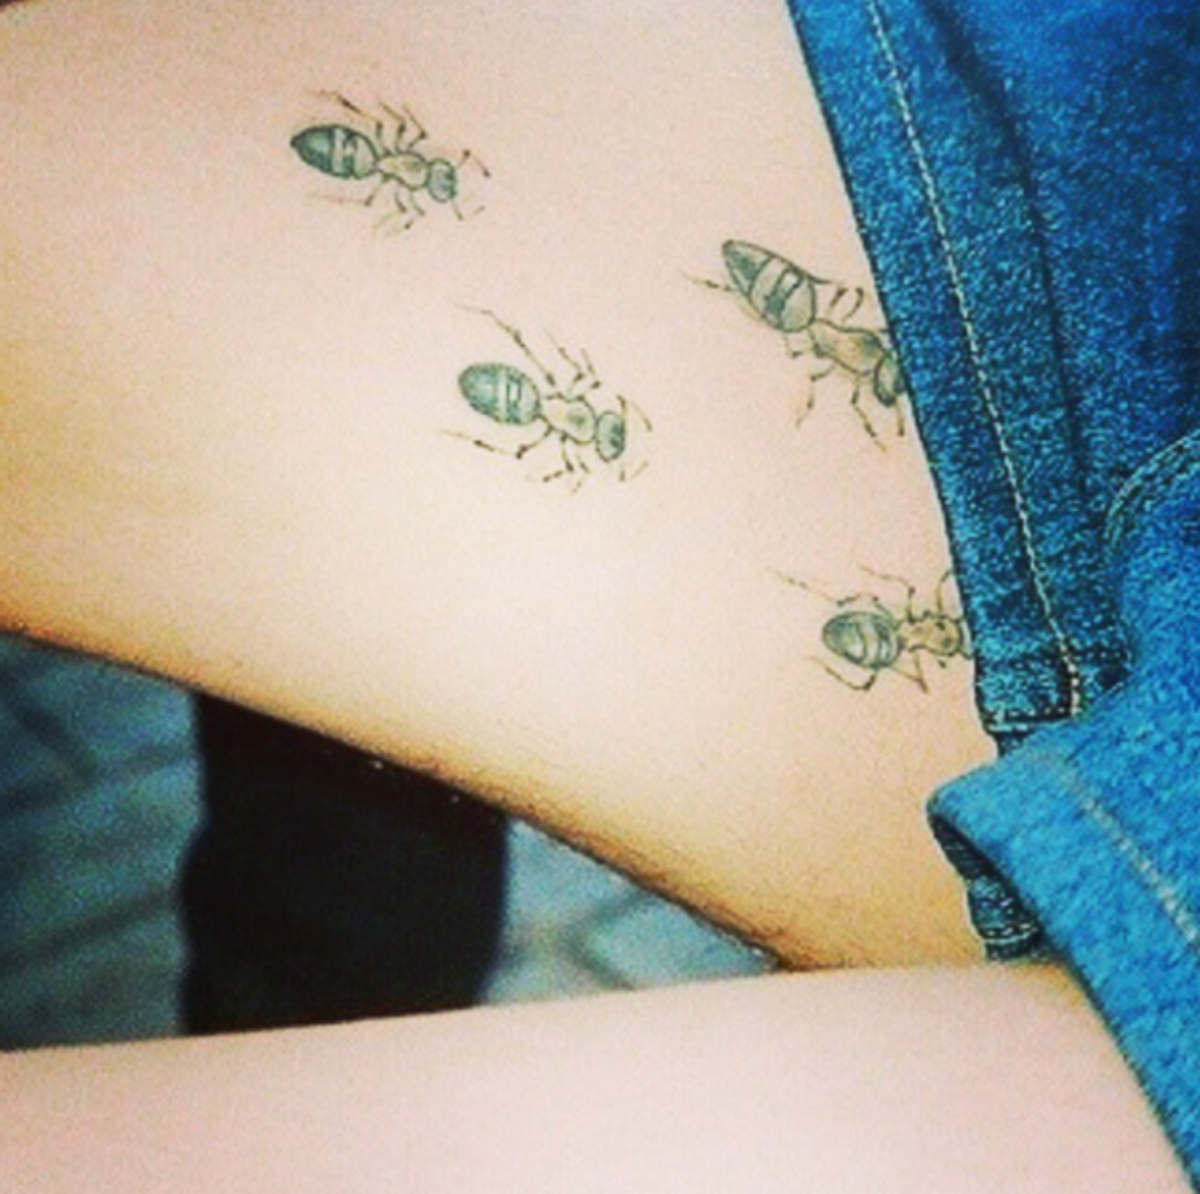 myre-tatoveringer-på-låret